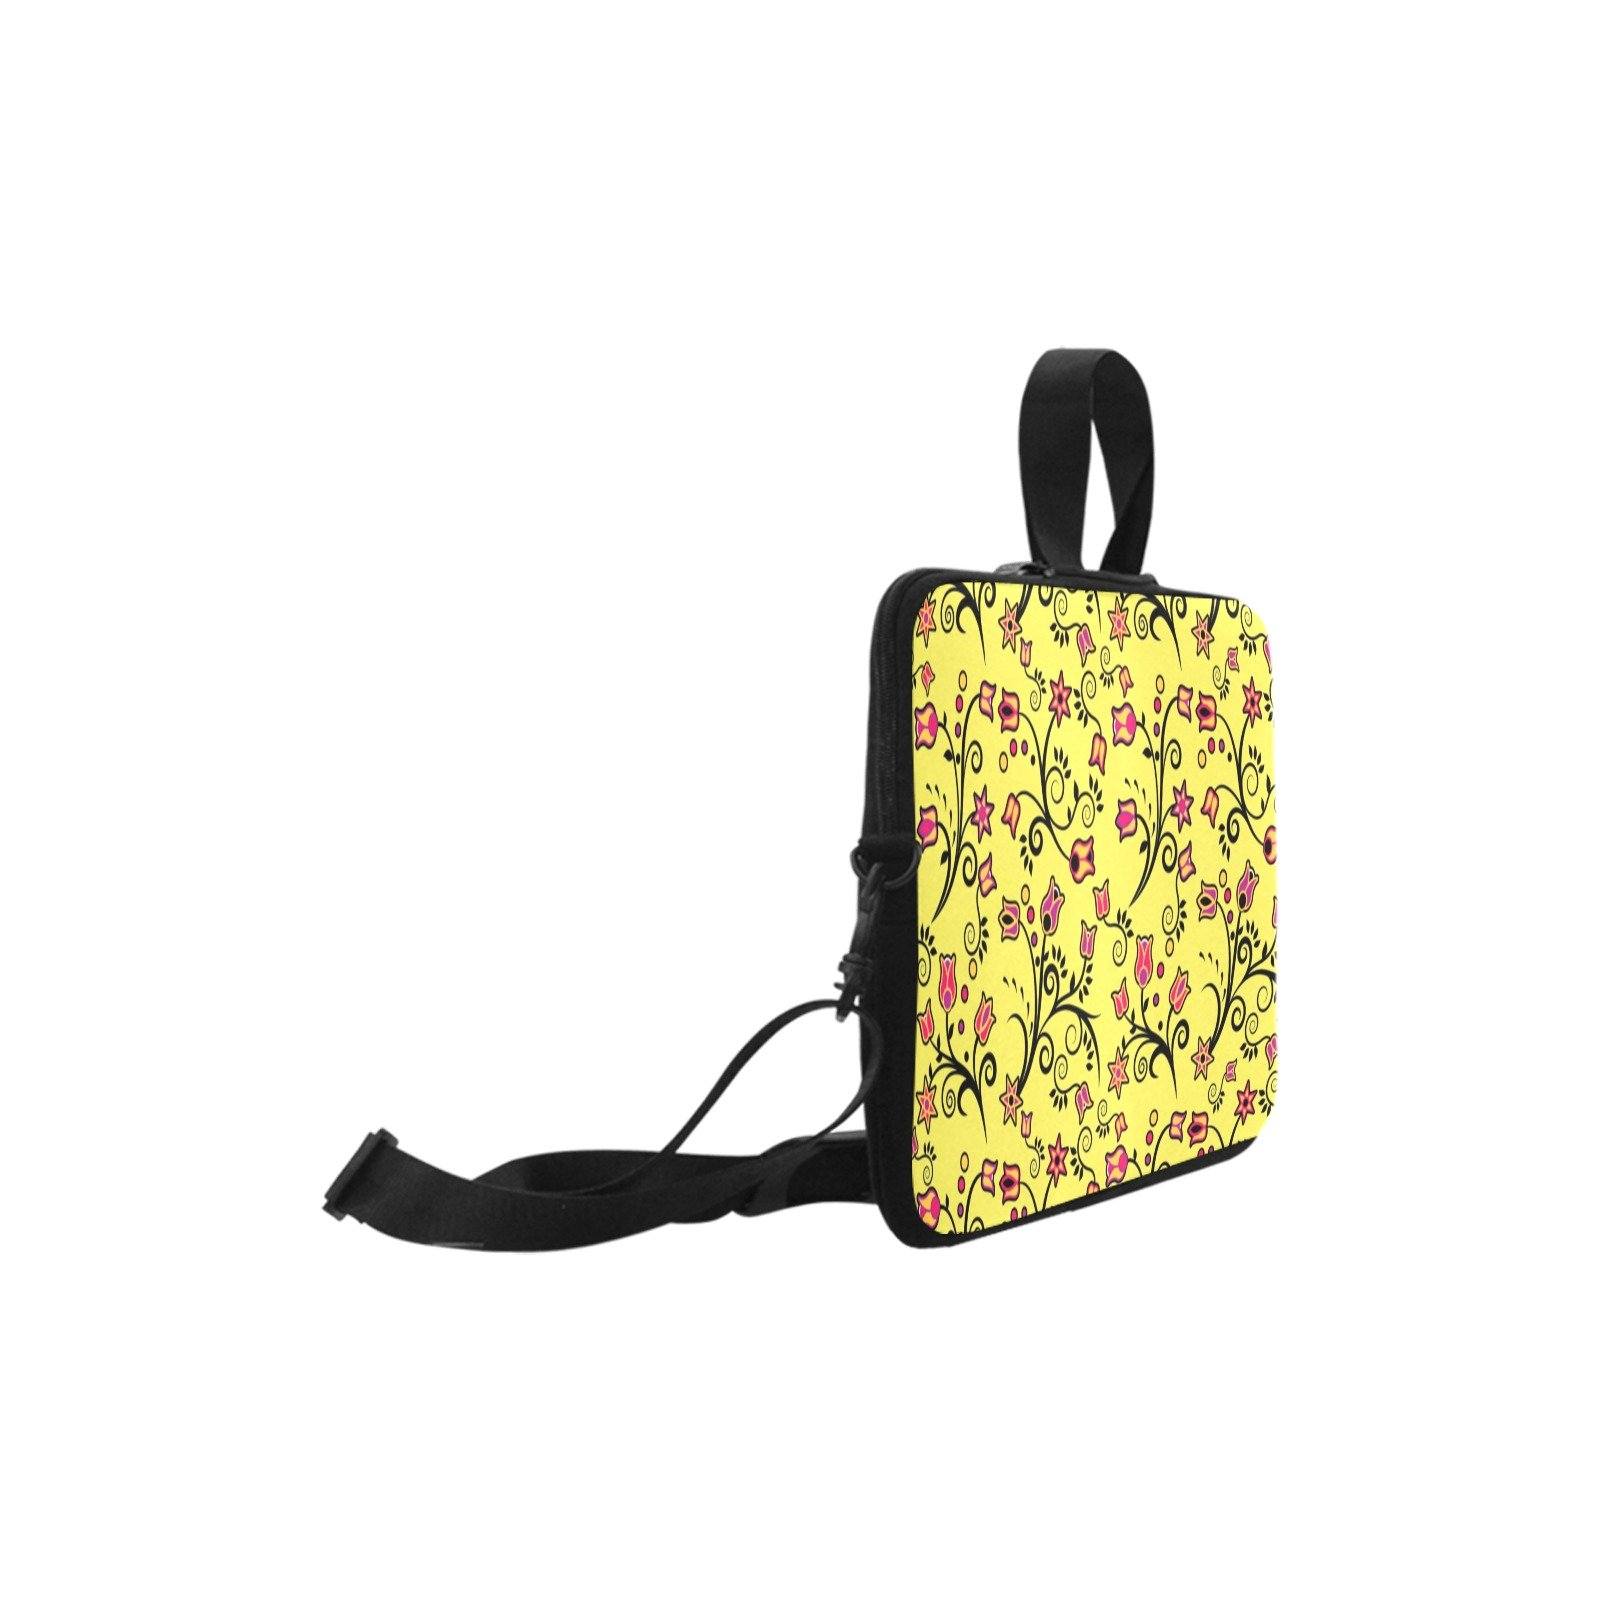 Key Lime Star Laptop Handbags 10" bag e-joyer 